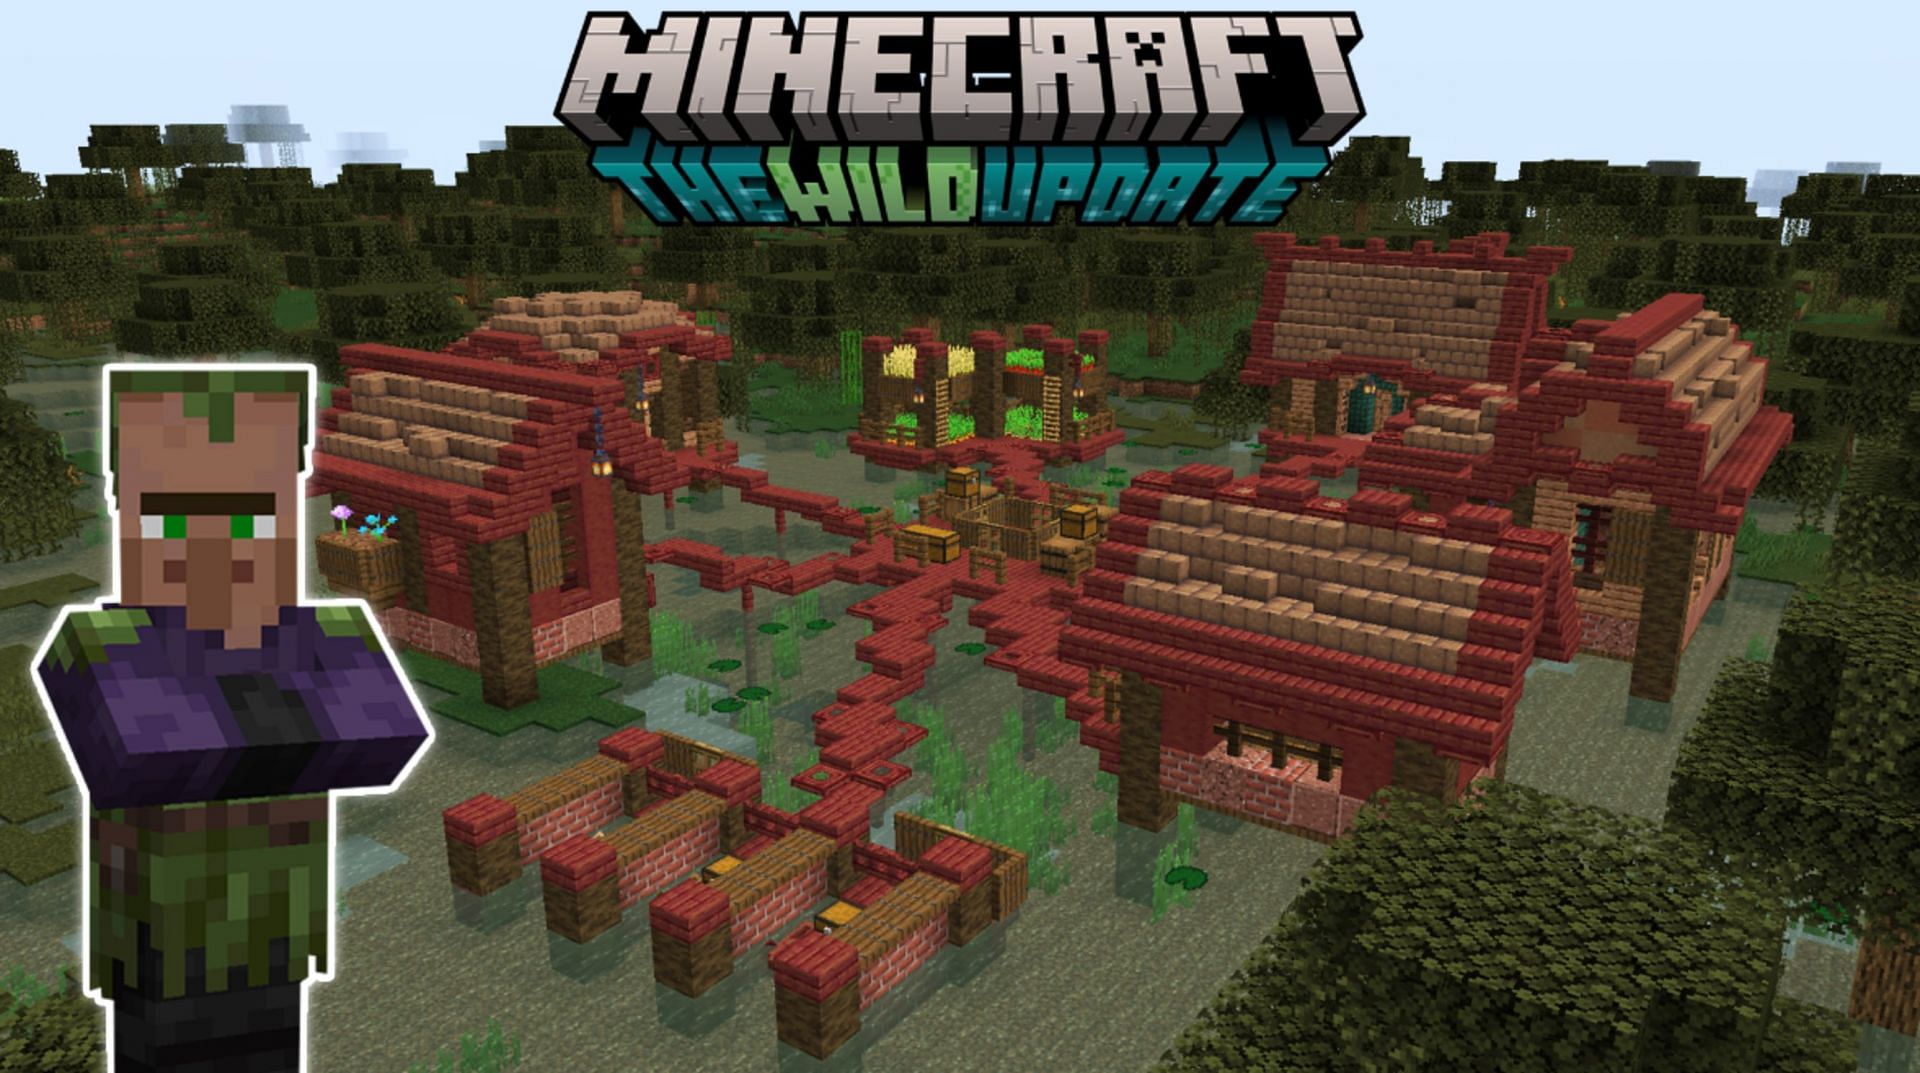 A mangrove village build in Minecraft (Image via @itsmarloe/Twitter)